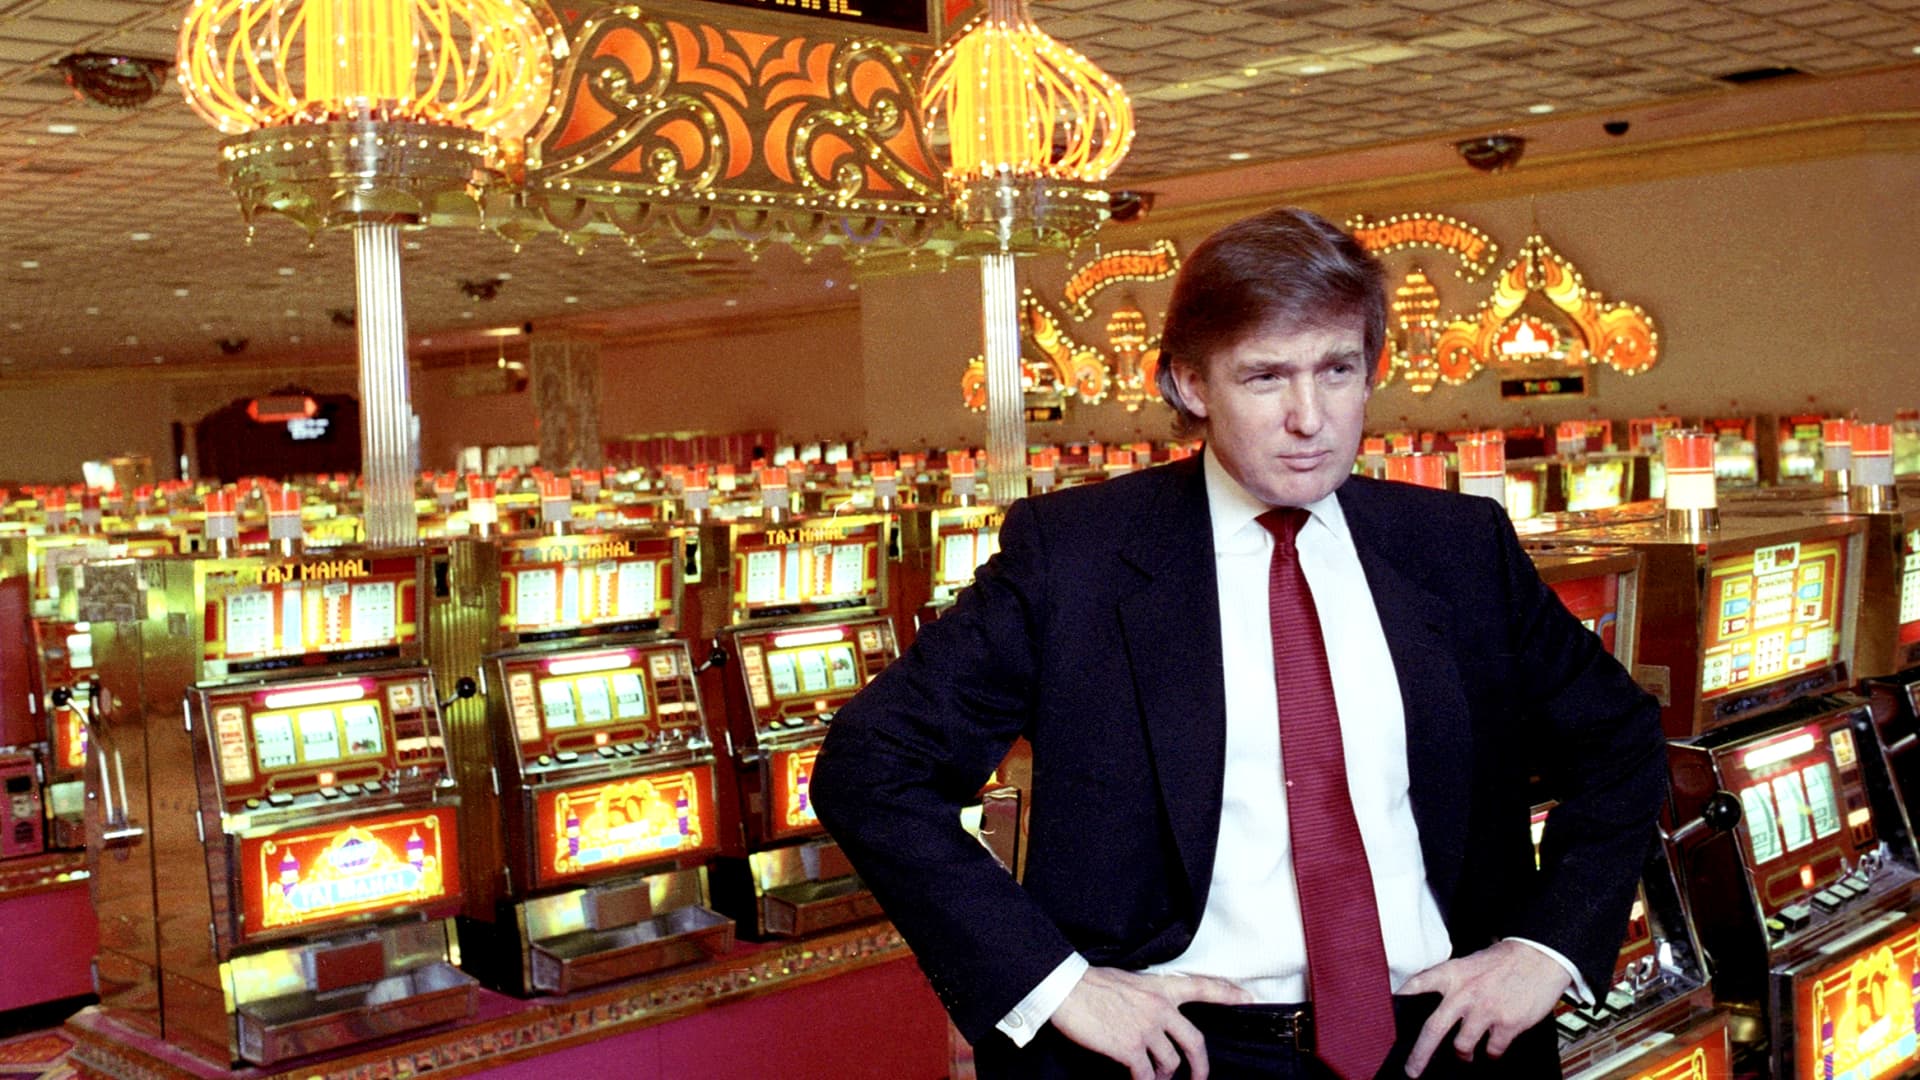 Donald J. Trump inside the casino of his venture, Trump Taj Mahal in Atlantic City, New Jersey, on March 16, 1990.